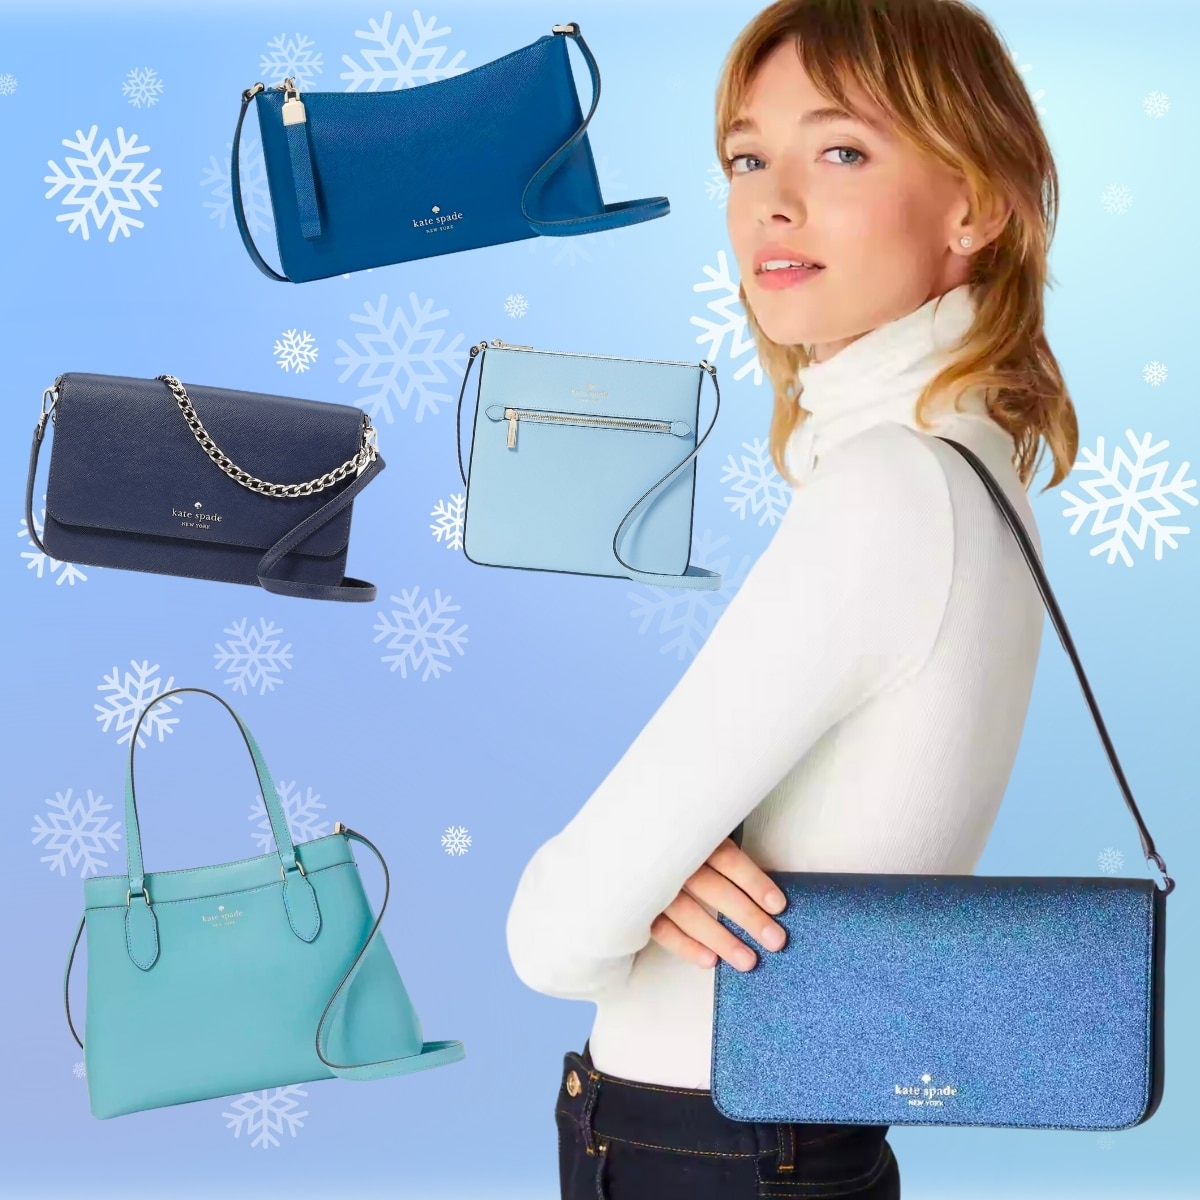 Kate Spade Outlet : r/handbags